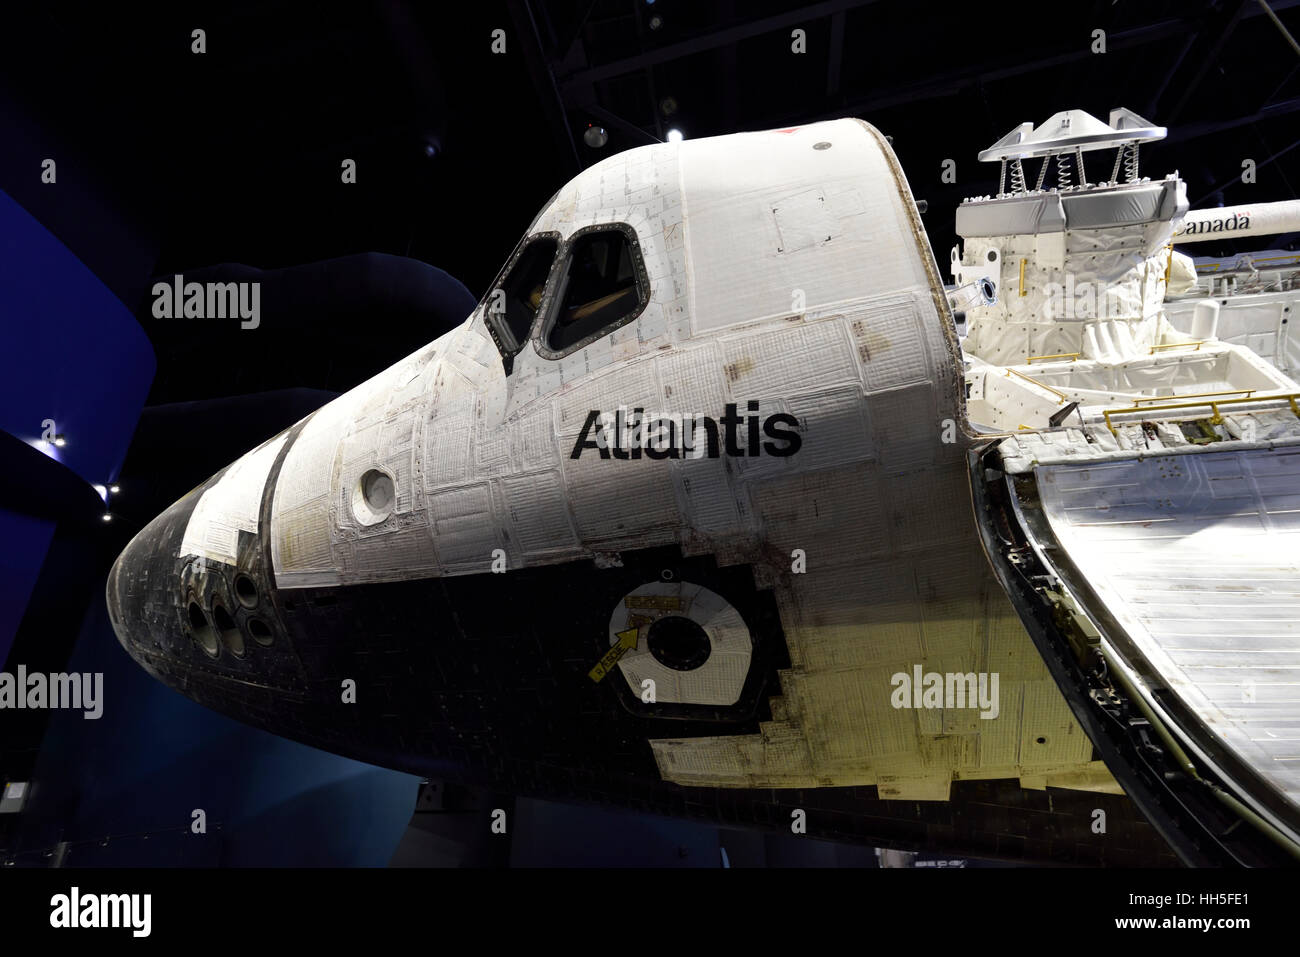 Space shuttle Atlantis on display Stock Photo